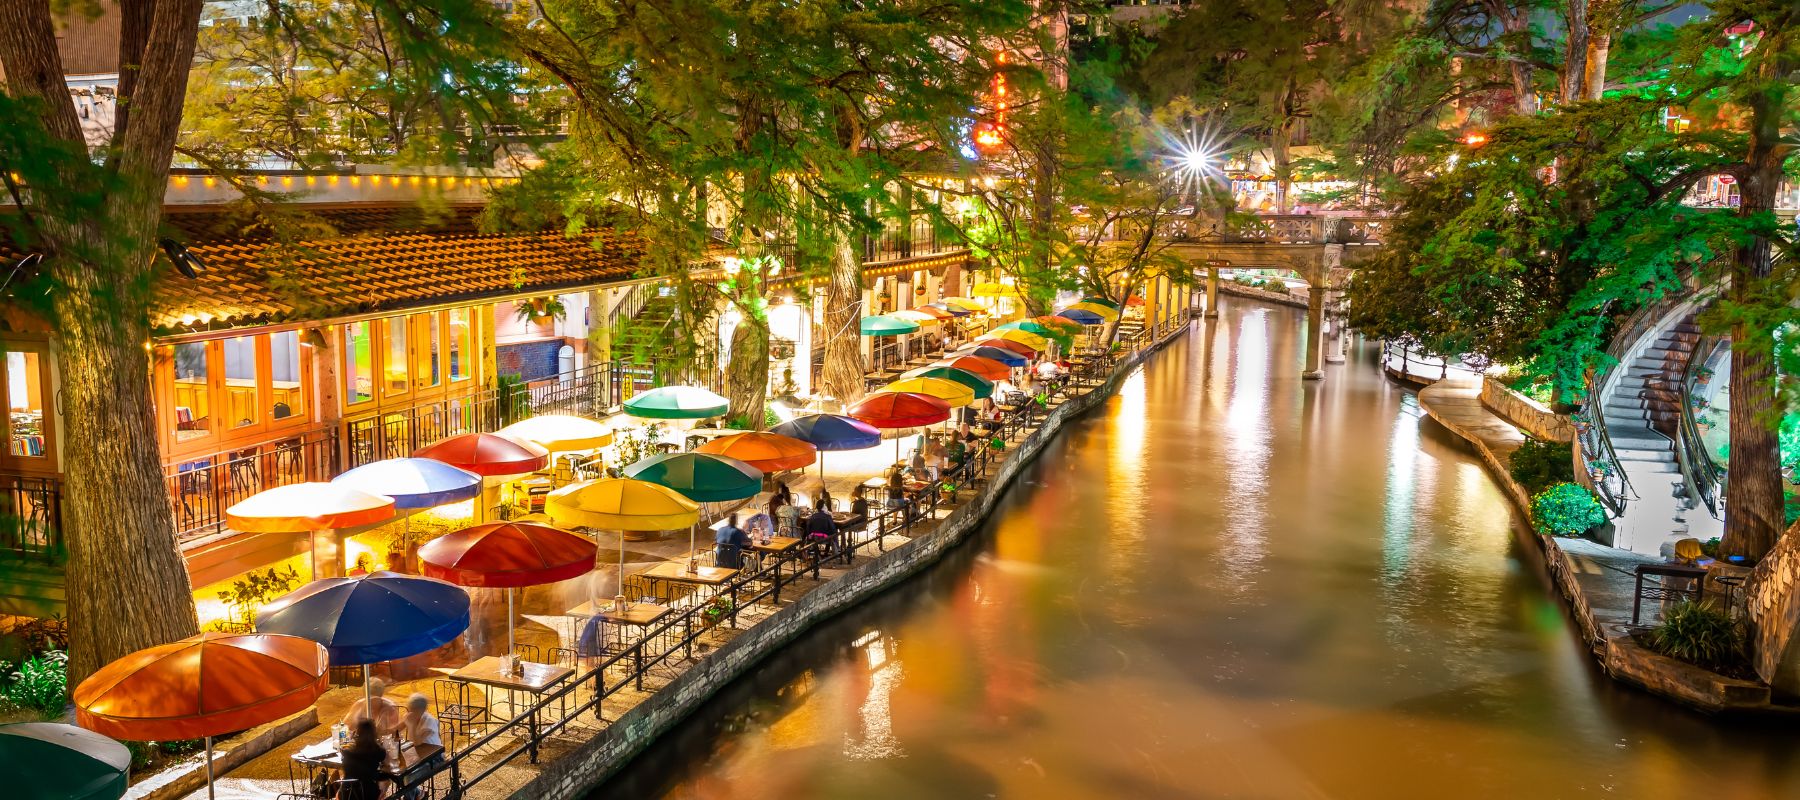 downtown san antonio riverwalk at night showing a riverwalk restaurant